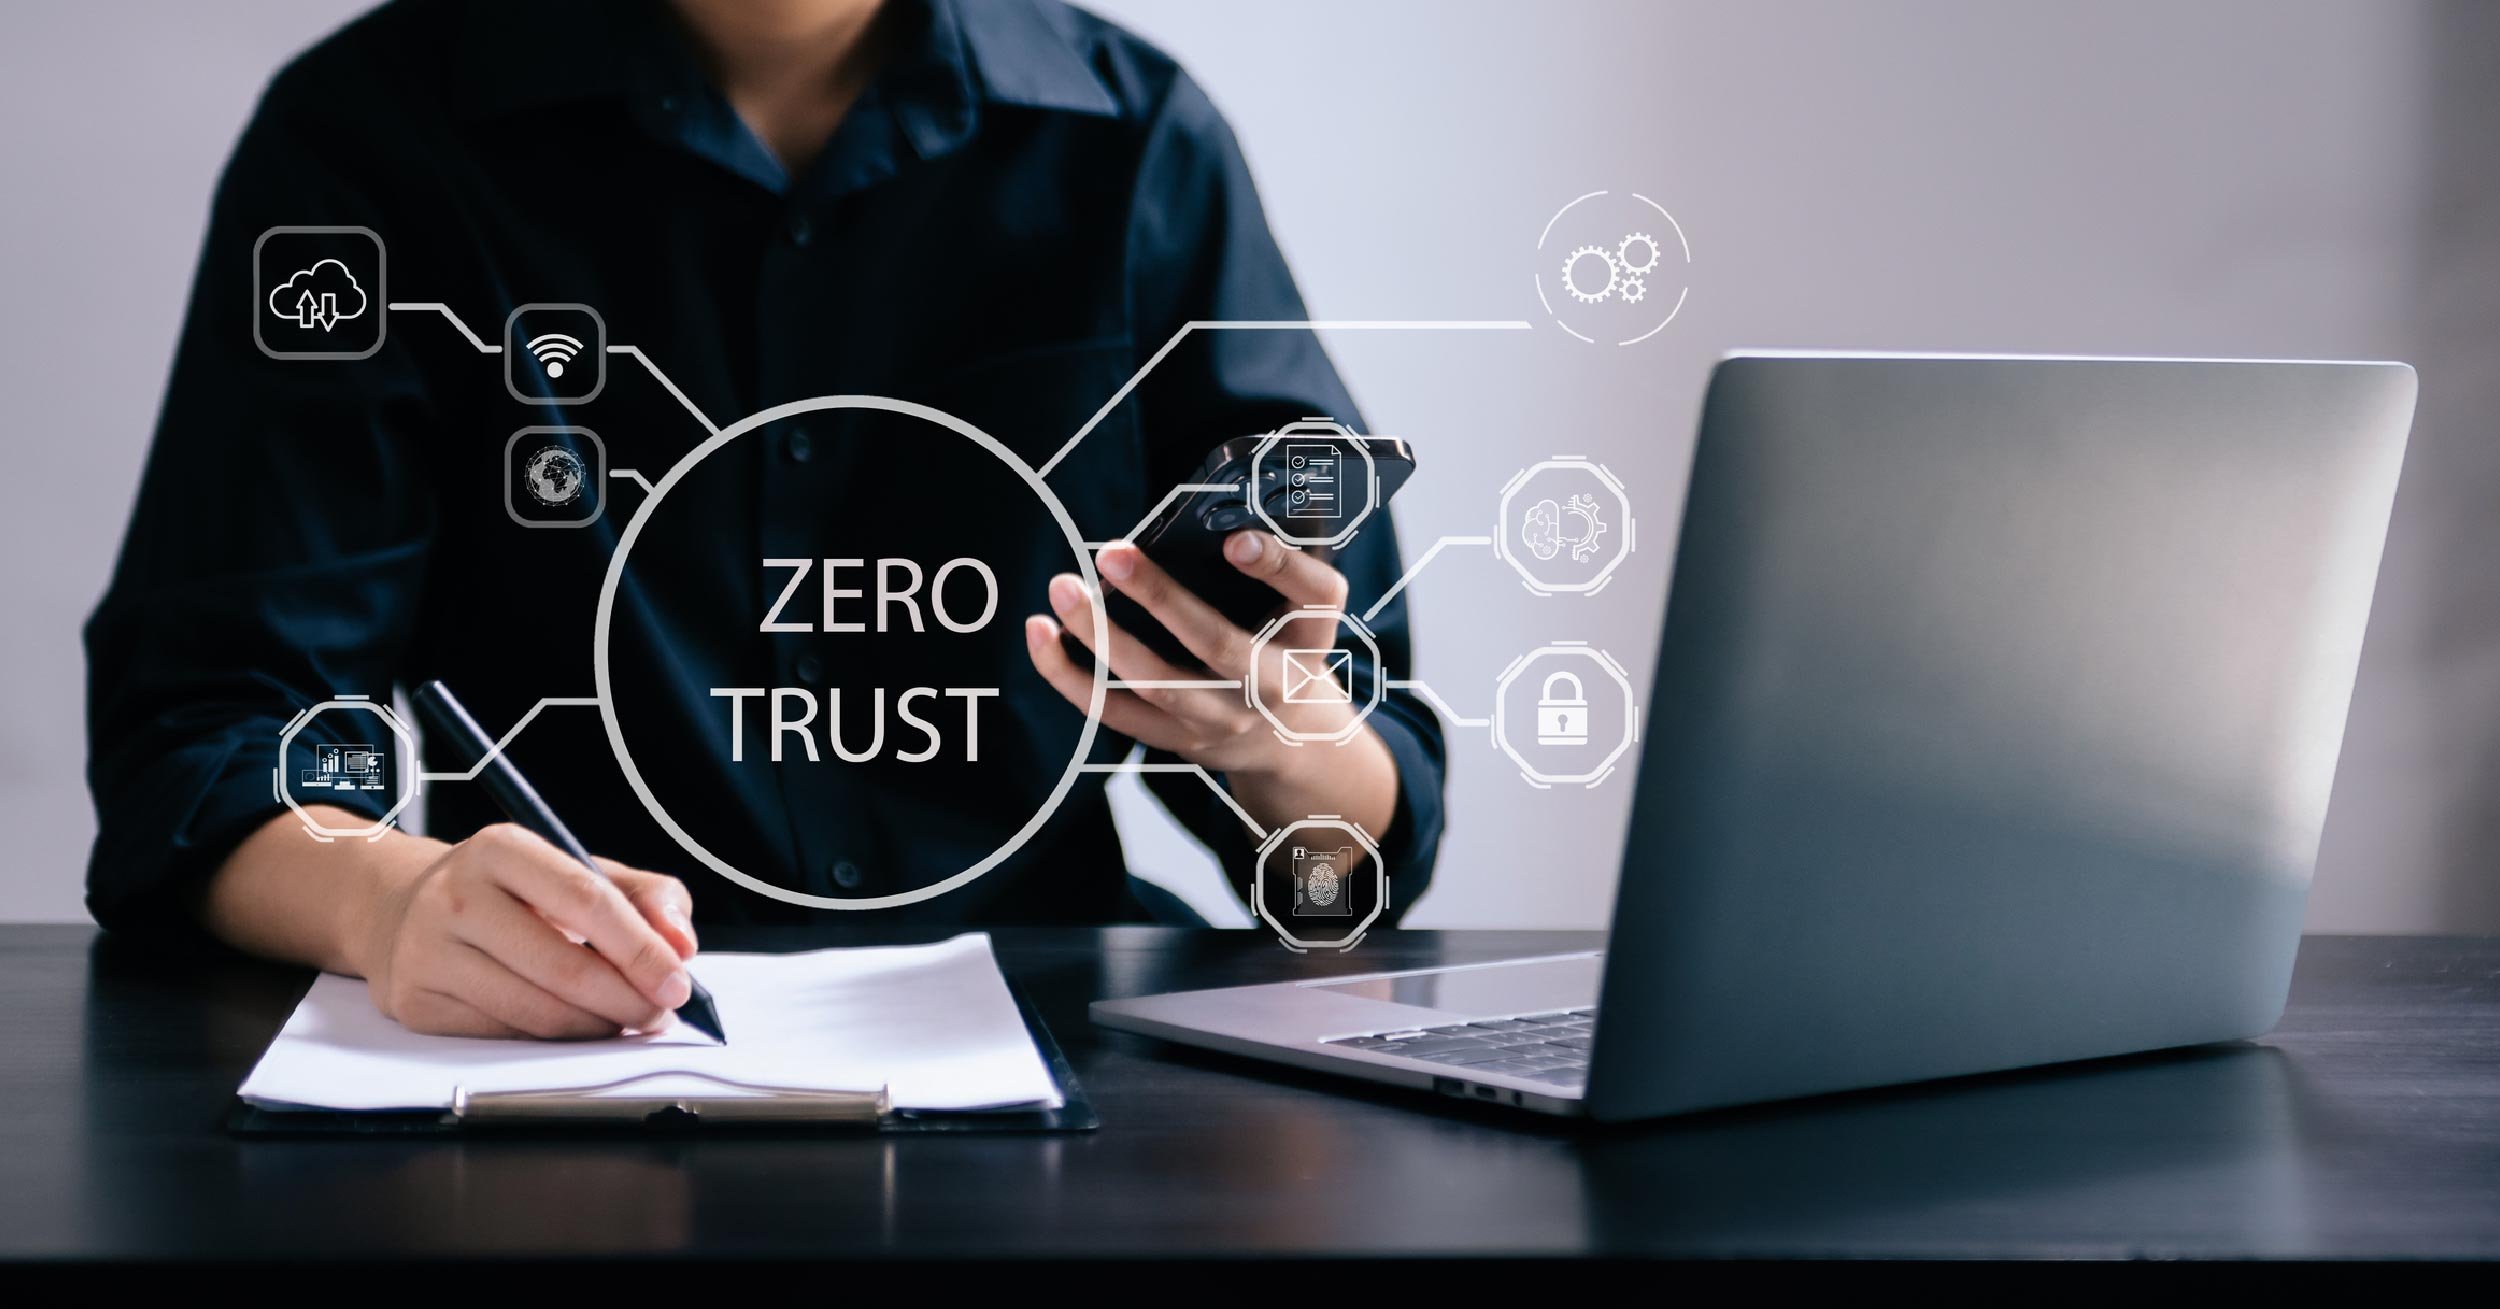 Zero trust model